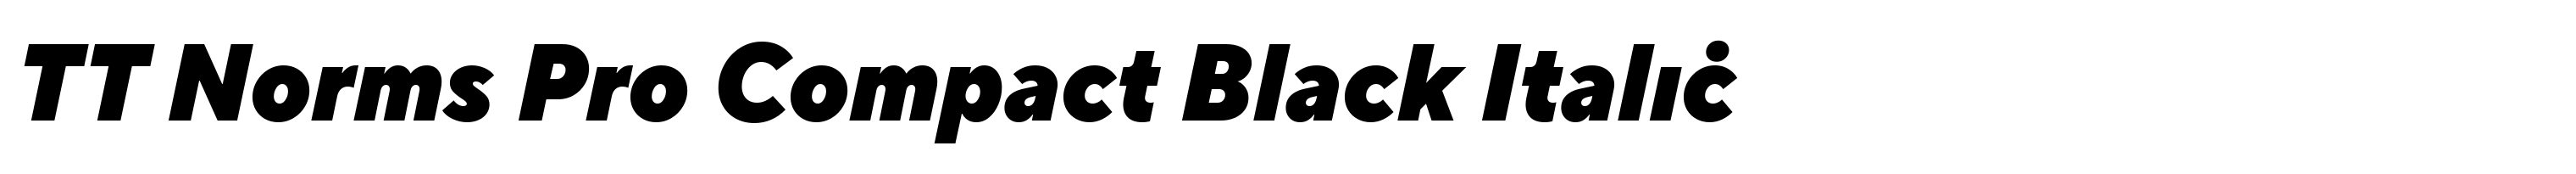 TT Norms Pro Compact Black Italic